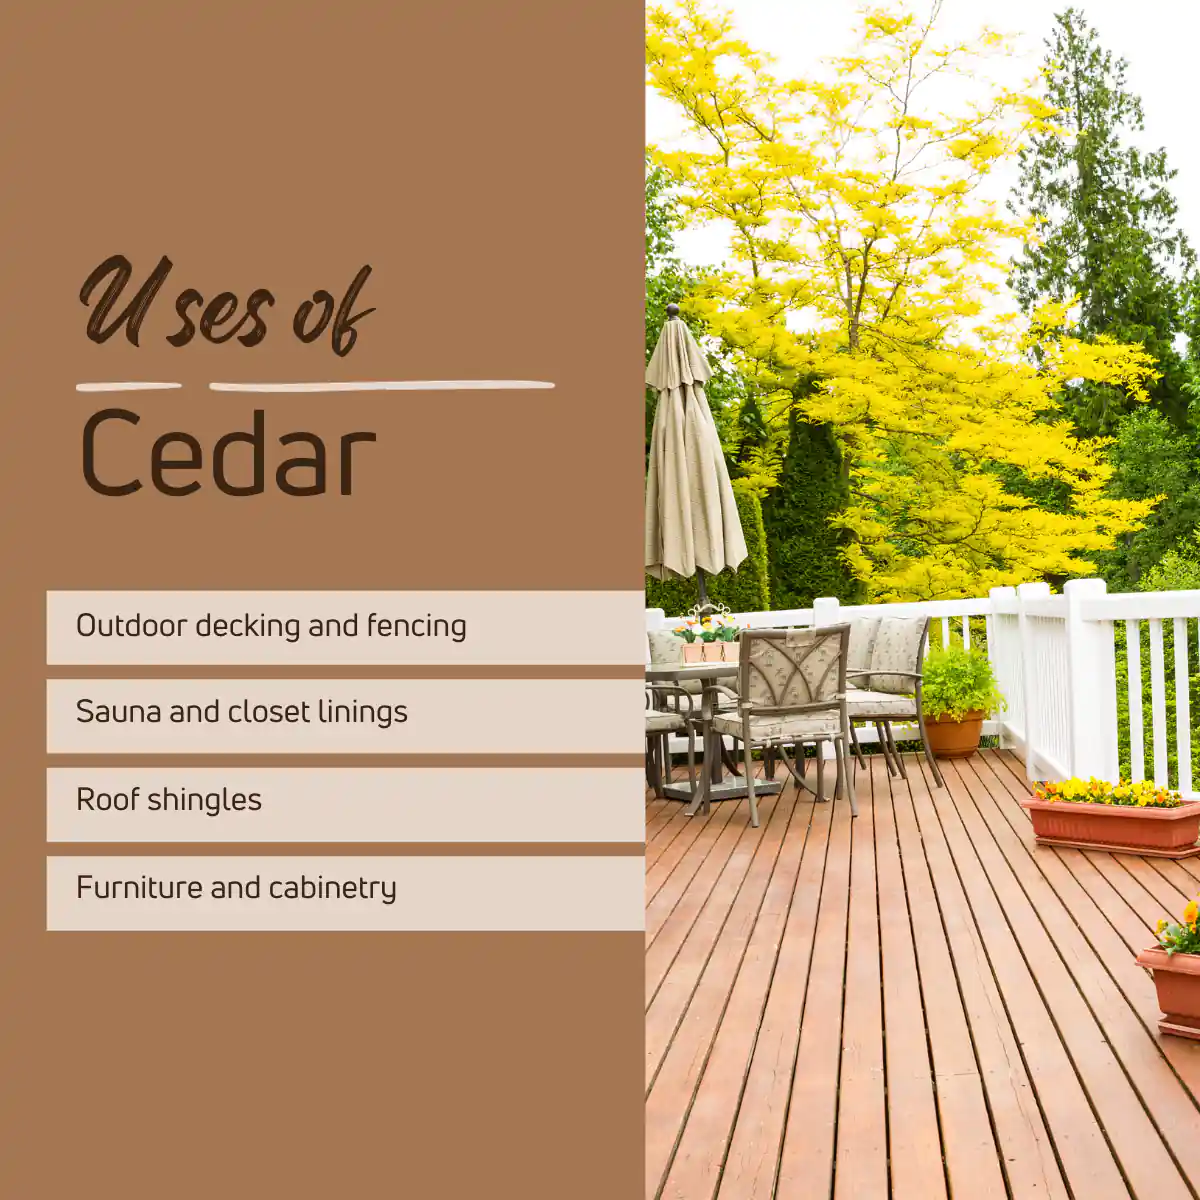 Uses of Cedar